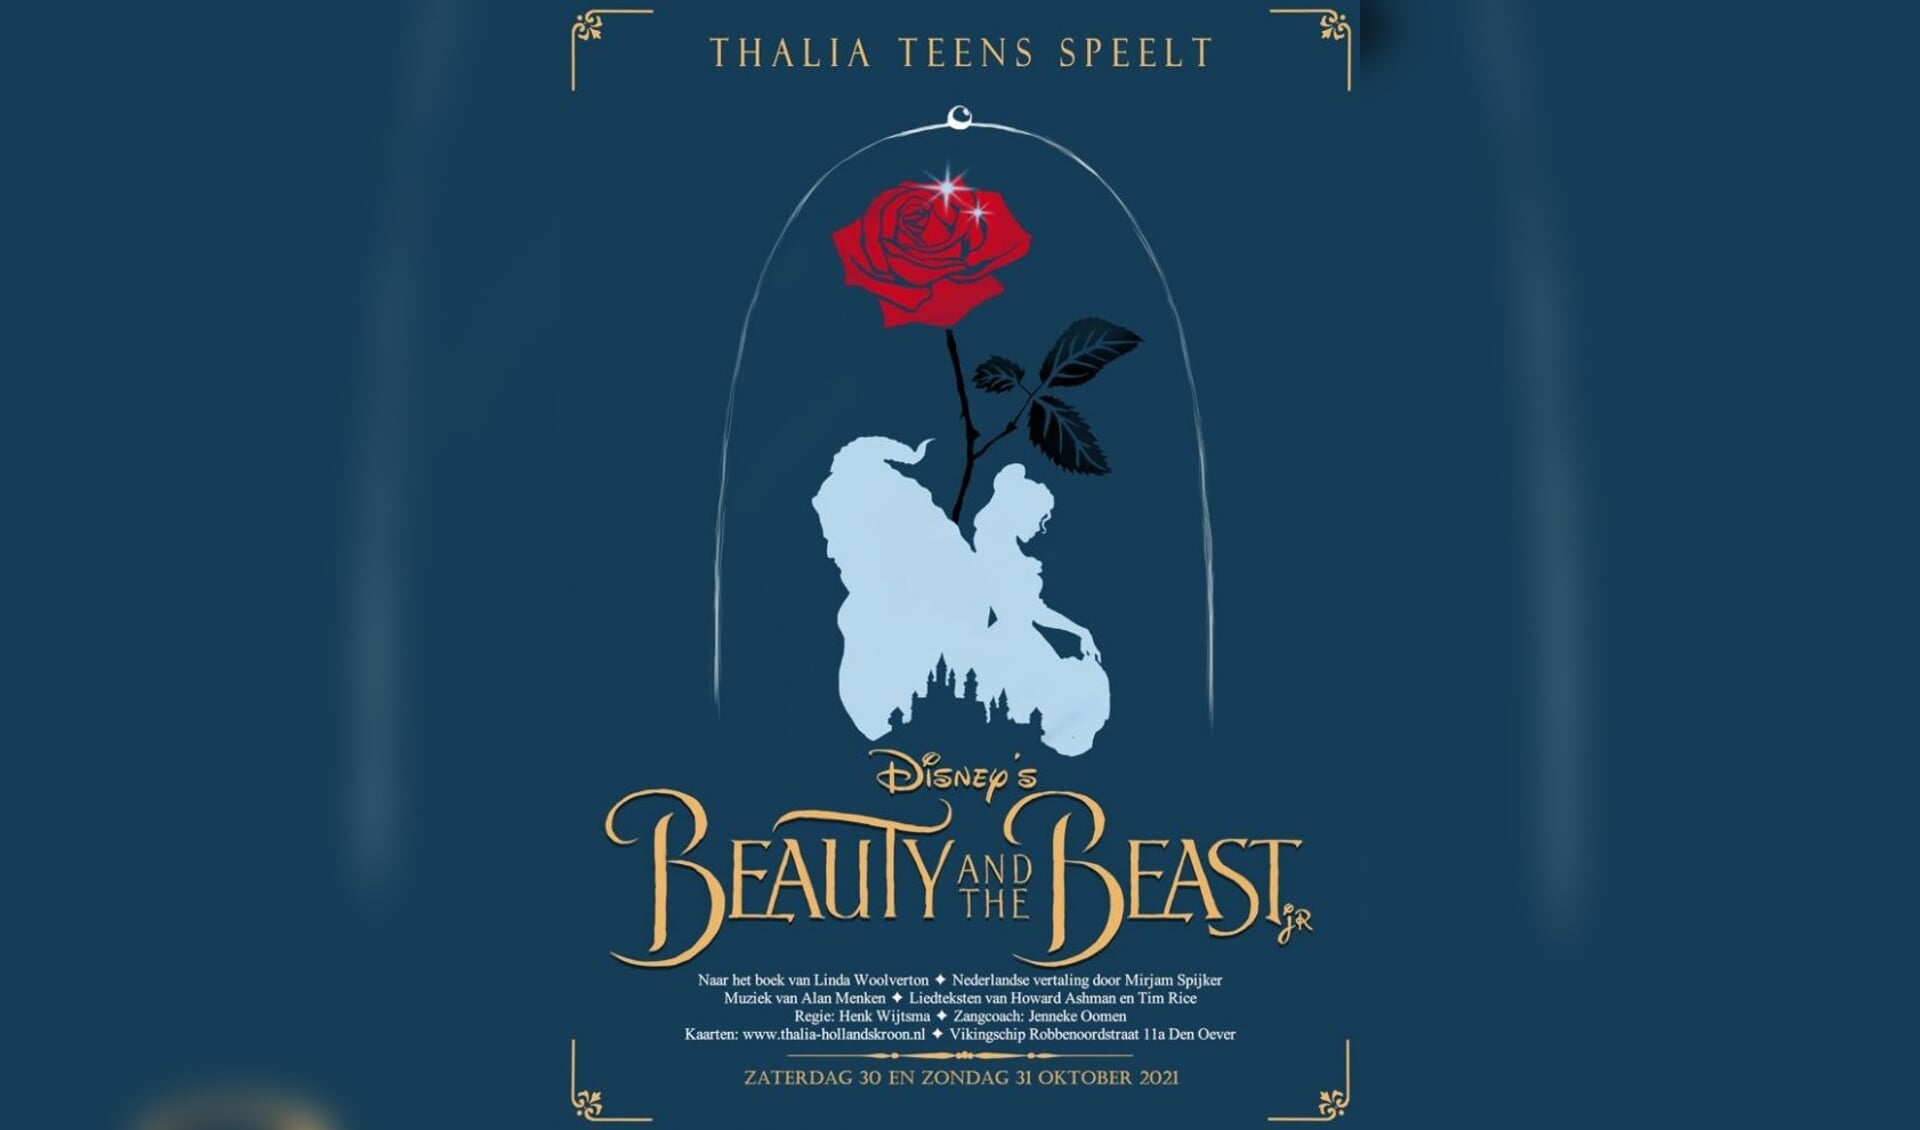 Thalia Teens speelt de musical Beauty and the Beast.